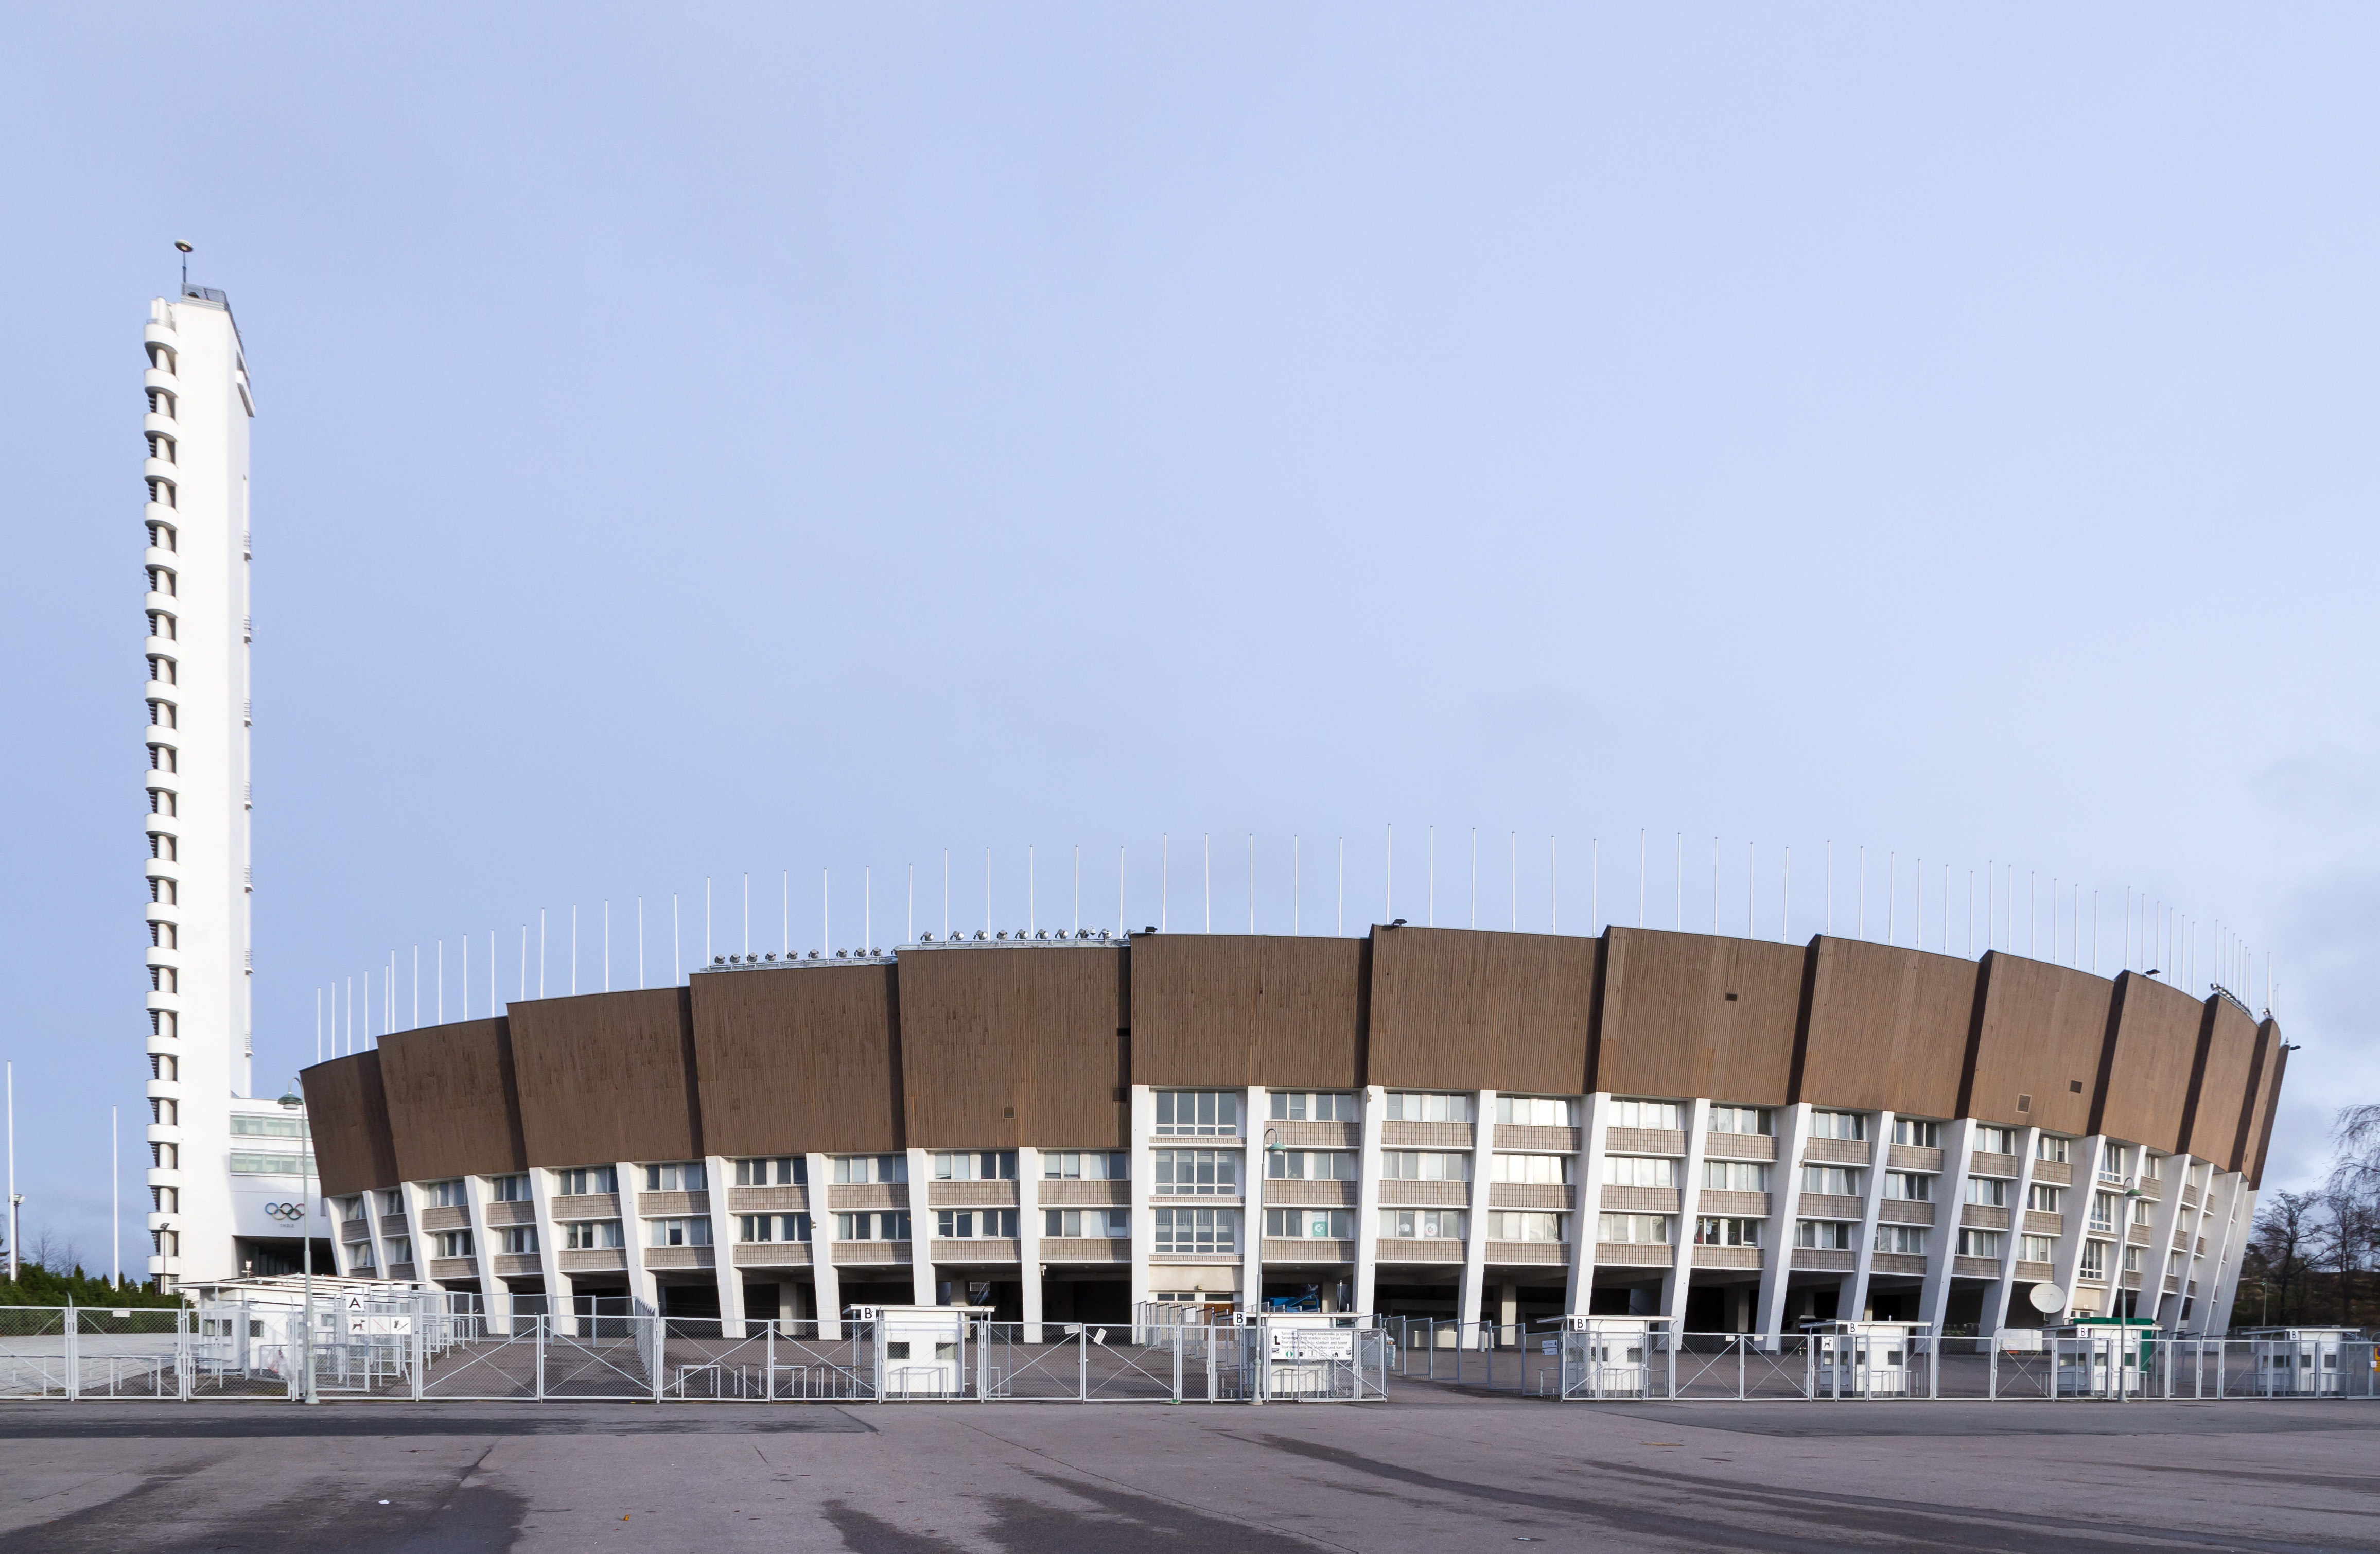 Helsinki_Olympic_Stadium-7147